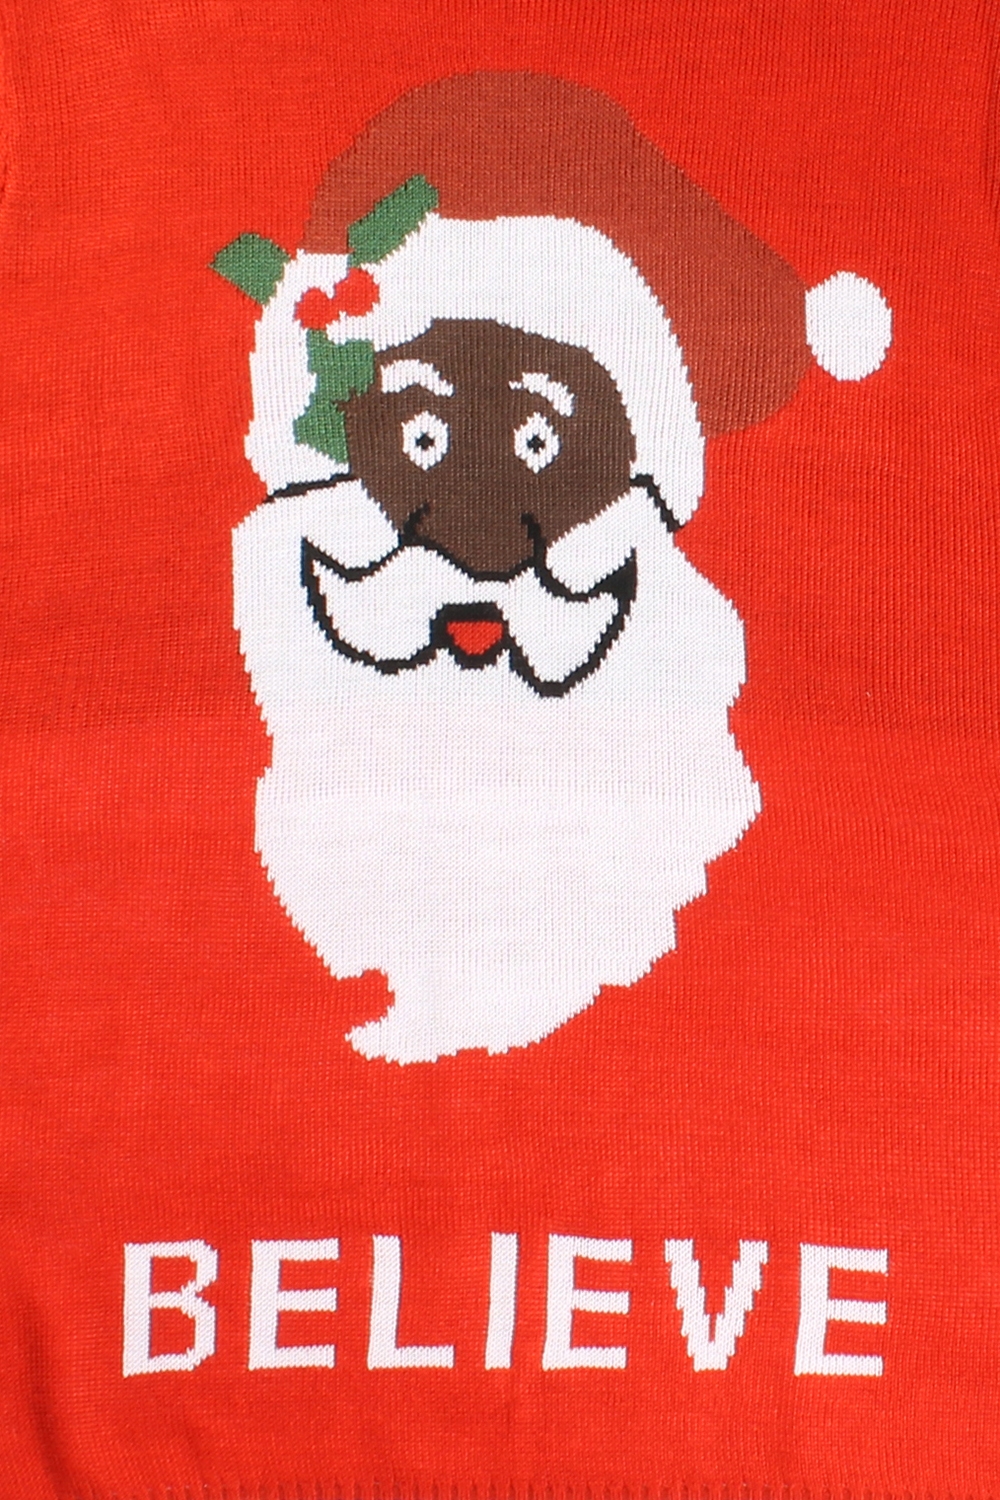 Black Santa Christmas Sweater Image4